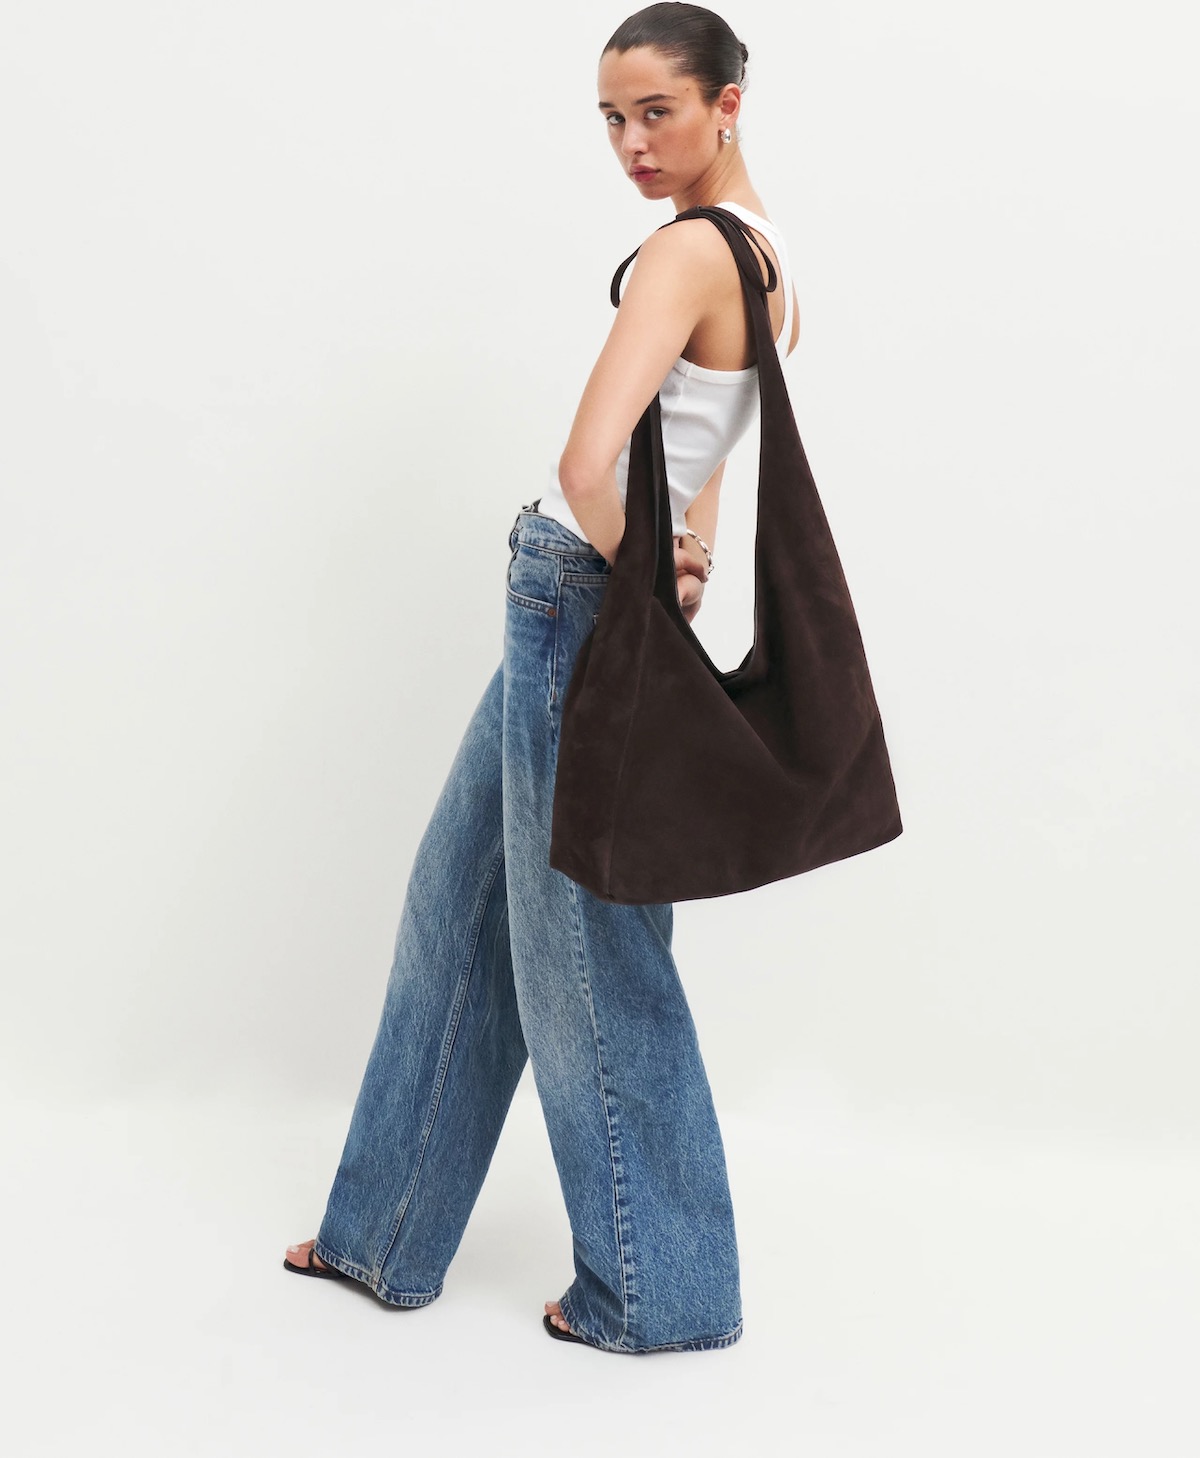 Black Leather Shopper, Large Tote Bag, Shopping Bag, Xxl Handbag, Everyday  Tote | eBay